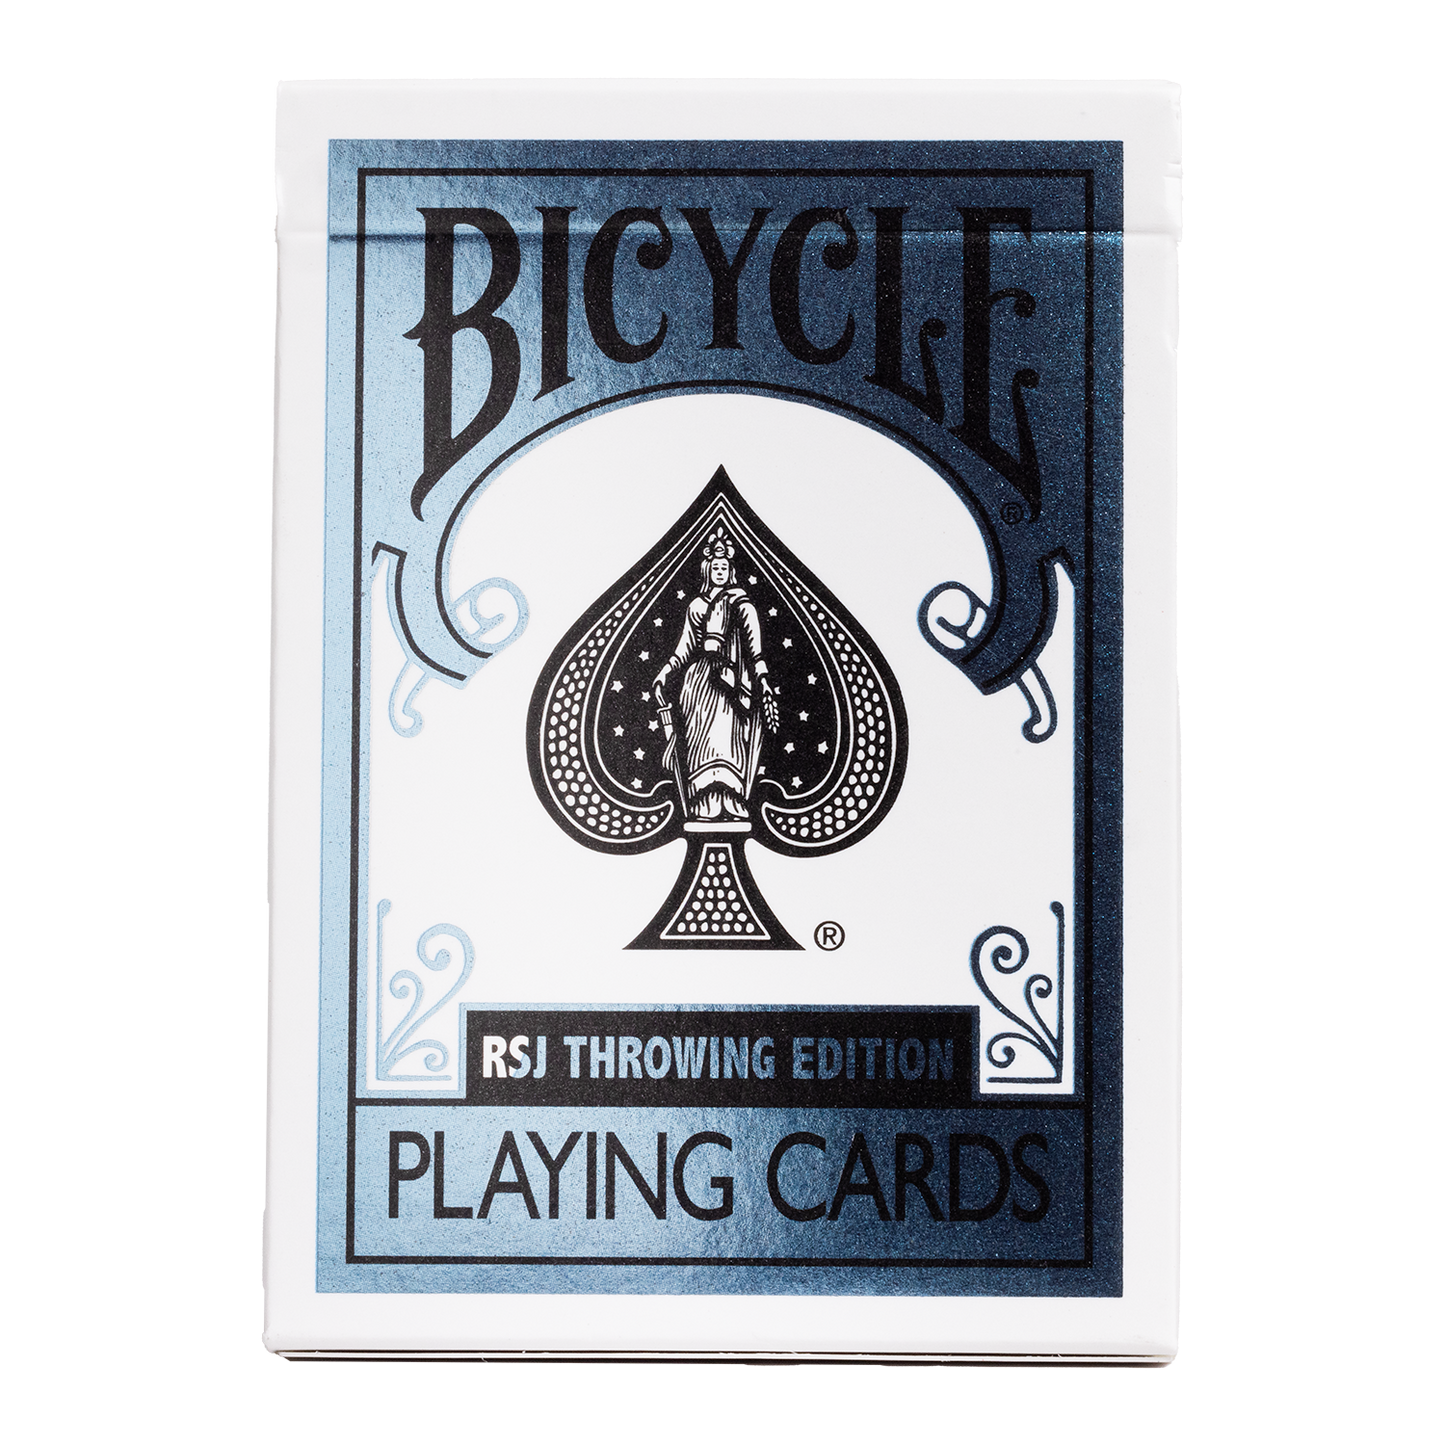 Bicycle Rick Smith Jr. Throwing Edition (Cardtopia Seal)